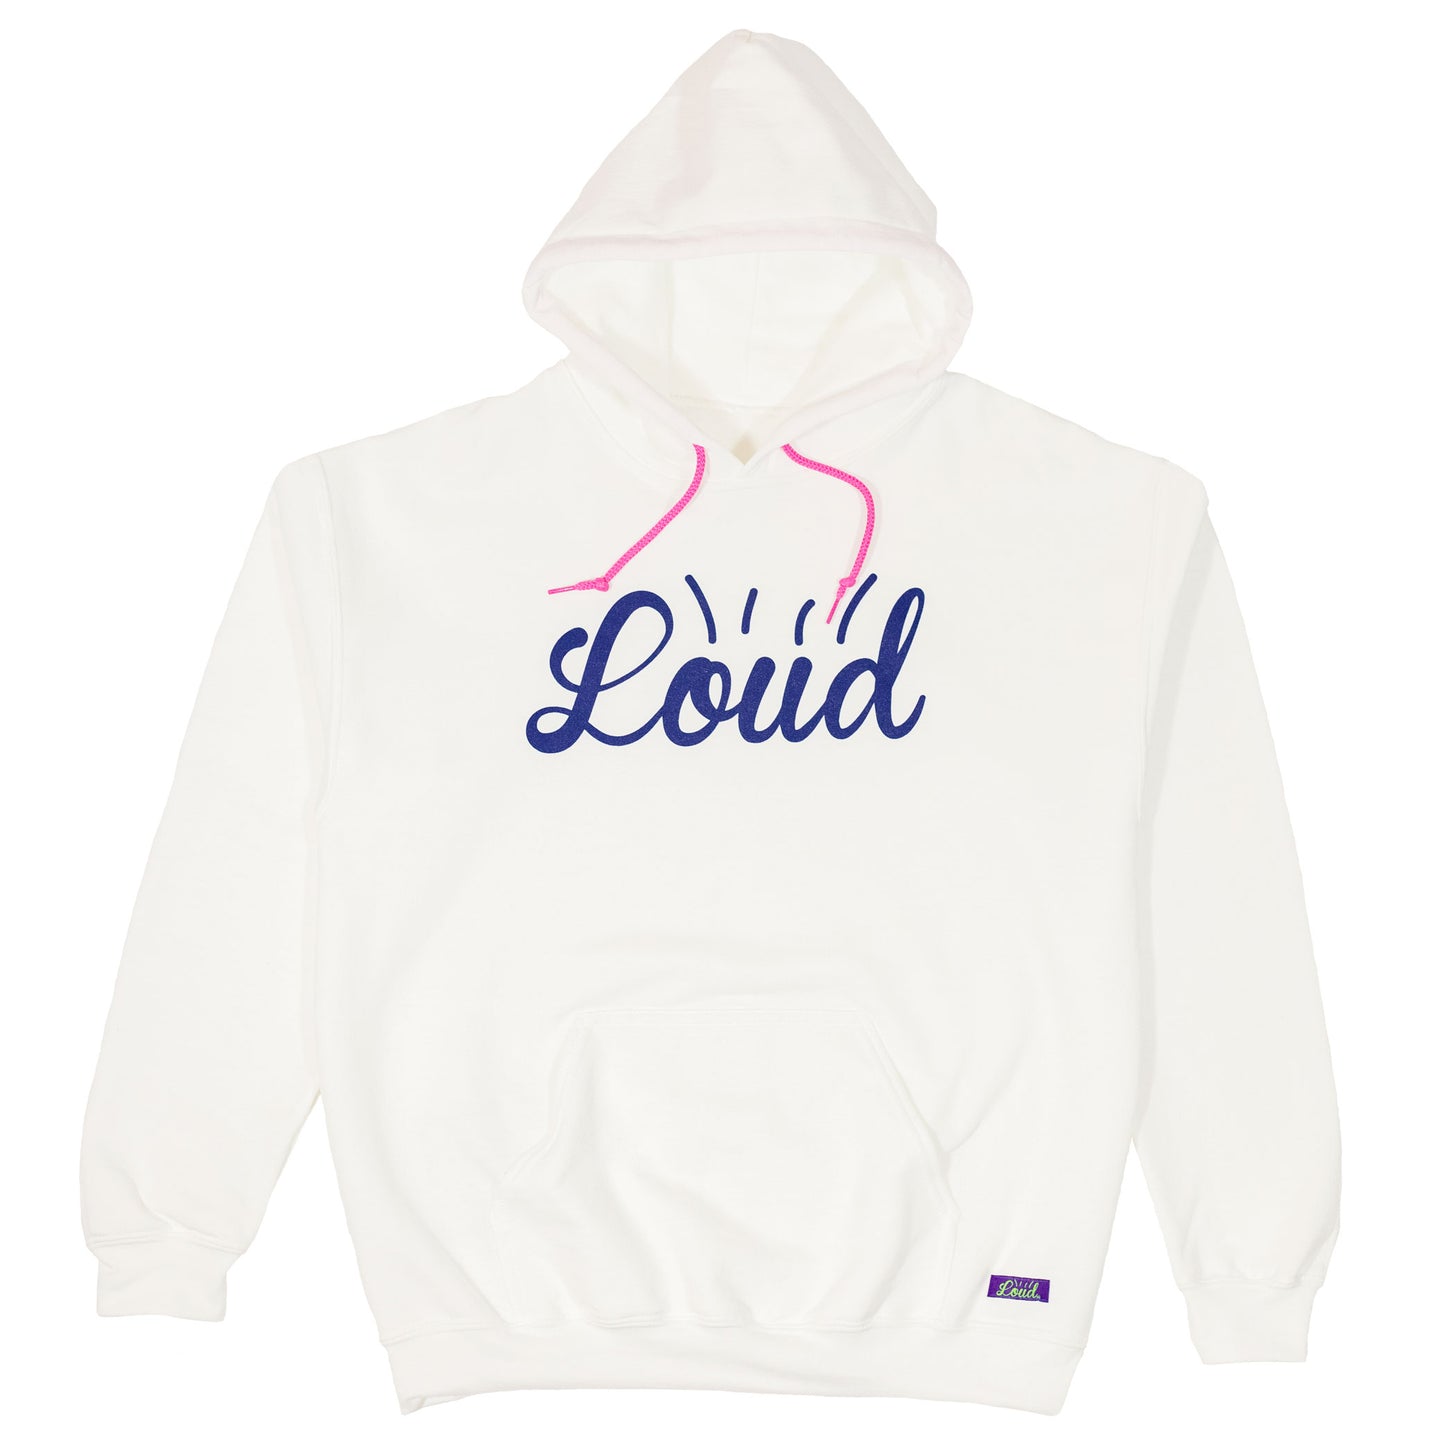 Loud Chance Encounter Hoodie - White/Navy/Pink